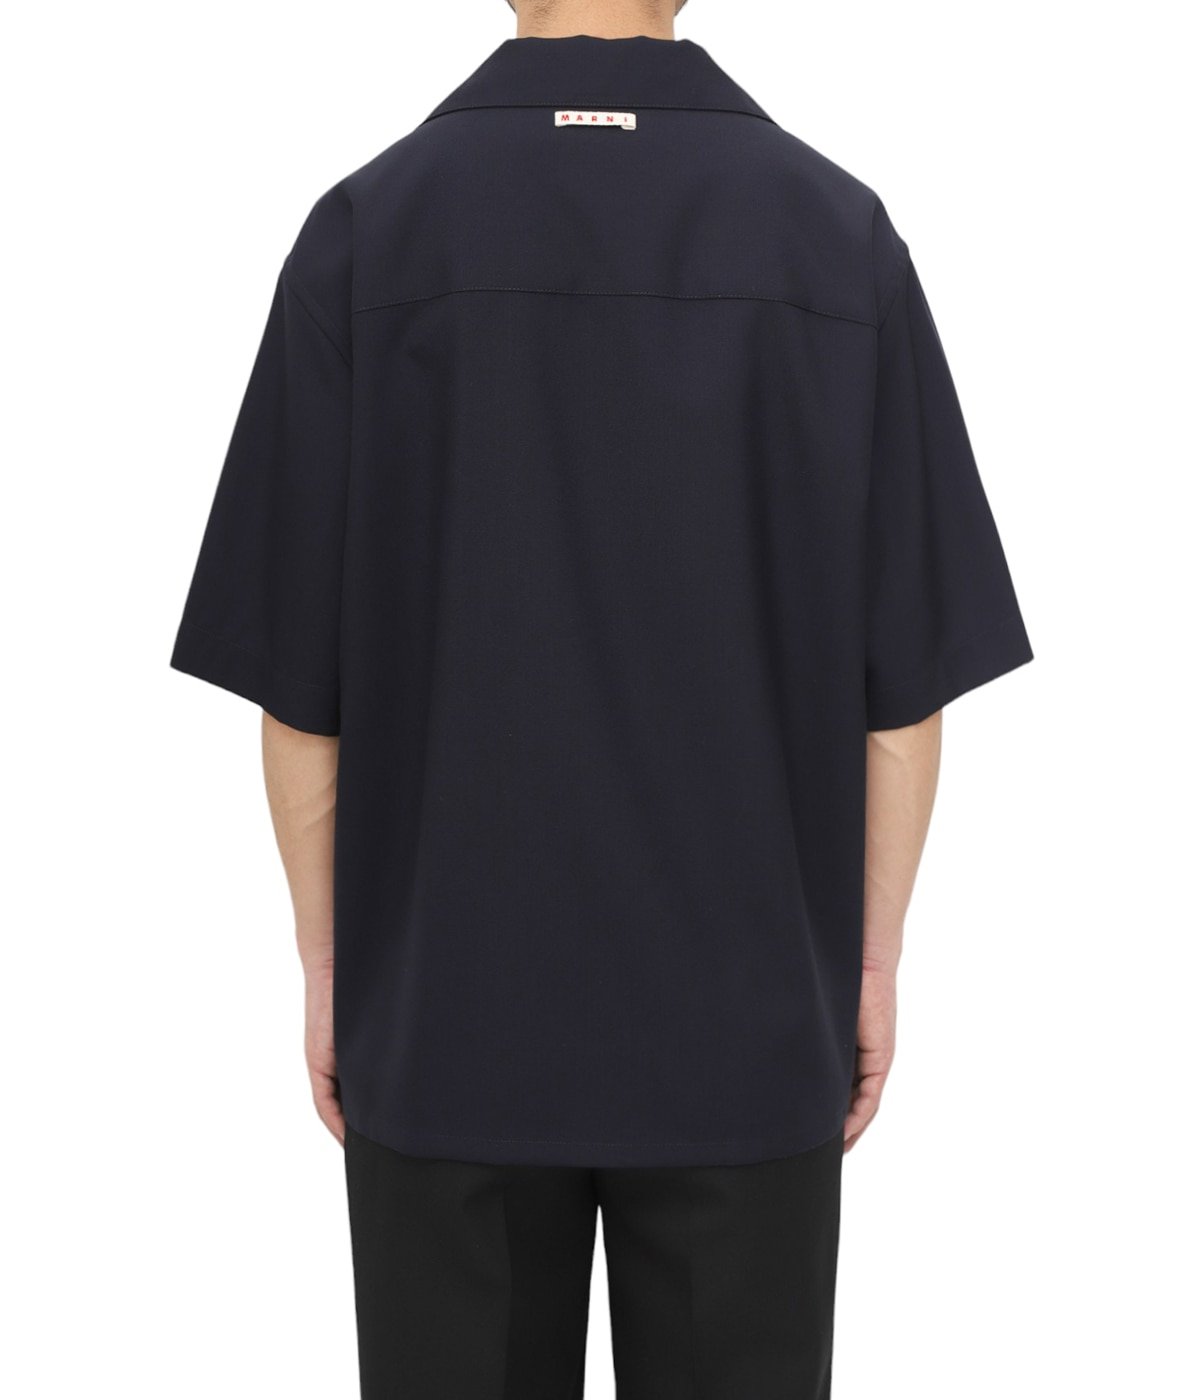 S/S SHIRT | MARNI(マルニ) / トップス 半袖シャツ (メンズ)の通販 